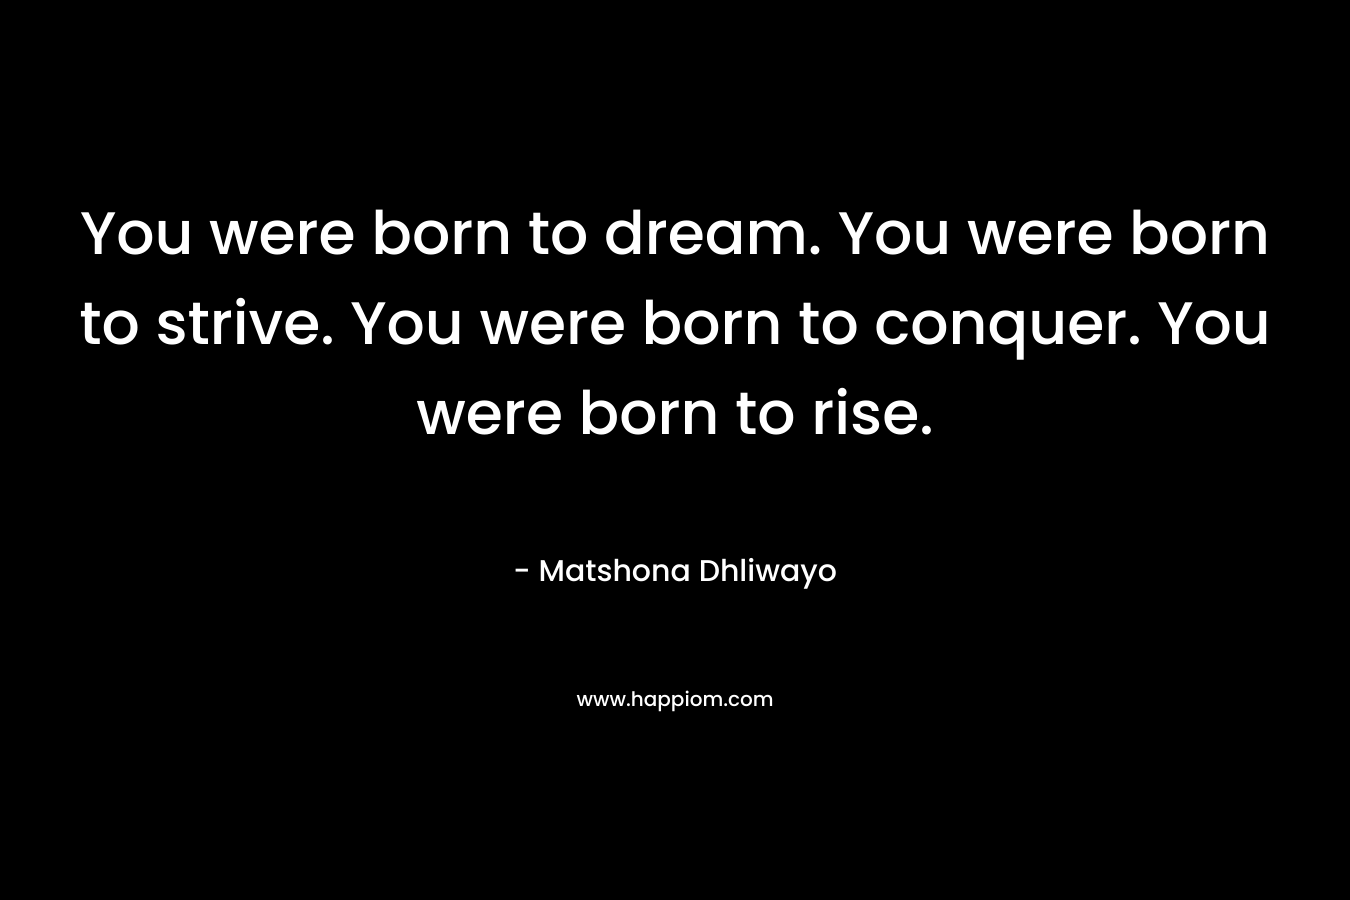 You were born to dream. You were born to strive. You were born to conquer. You were born to rise.